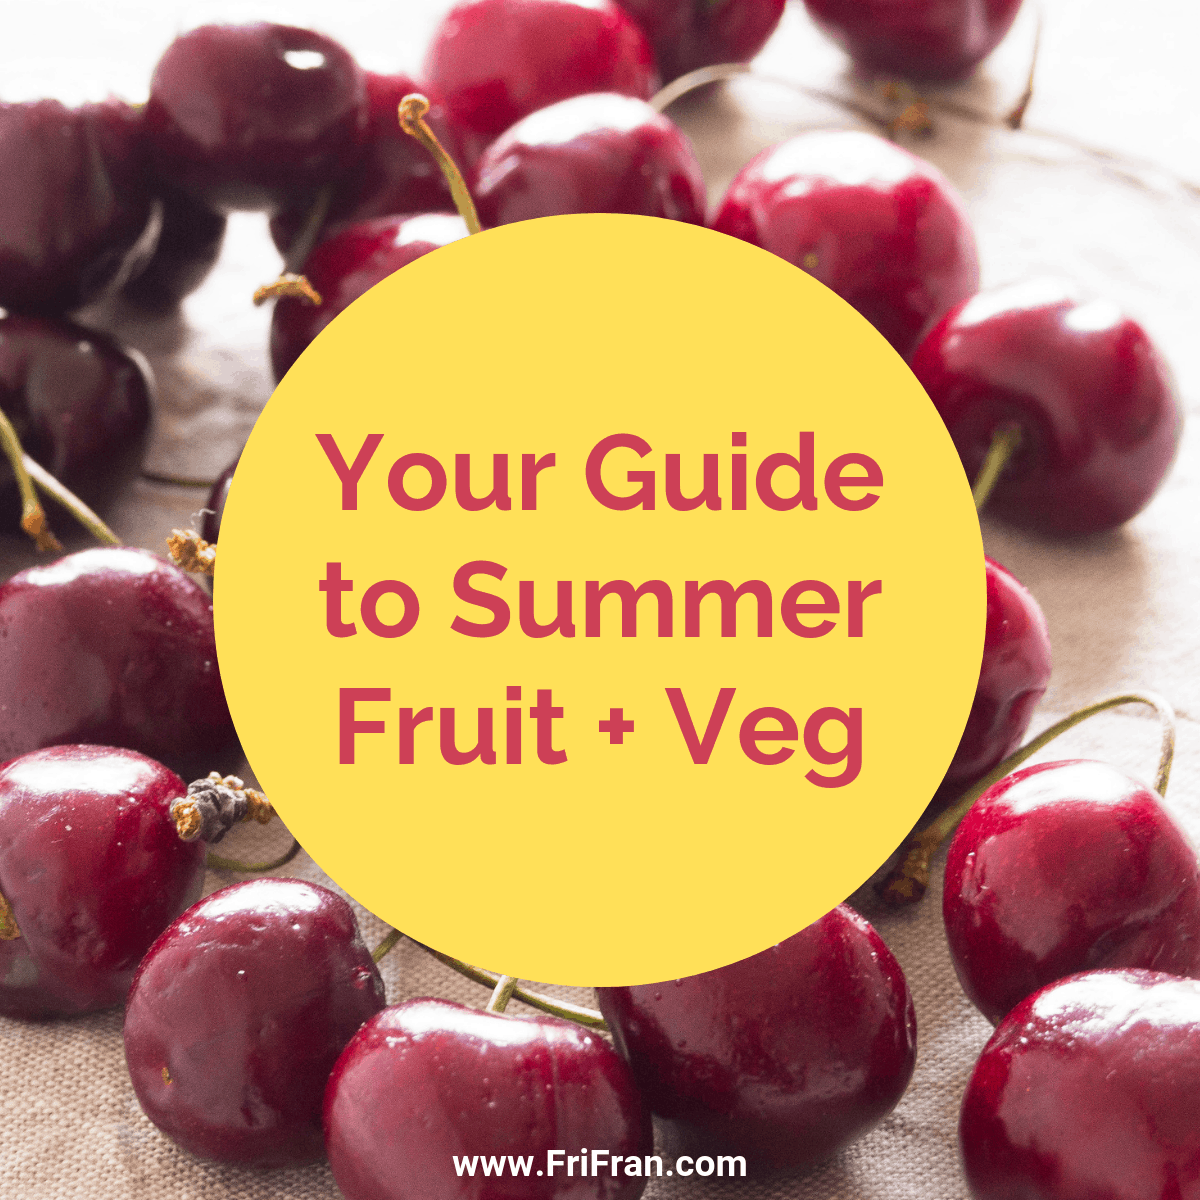 Your Guide to Summer Fruit and Veg. #GlutenFree #Vegan #GlutenFreeVegan. From #FriFran